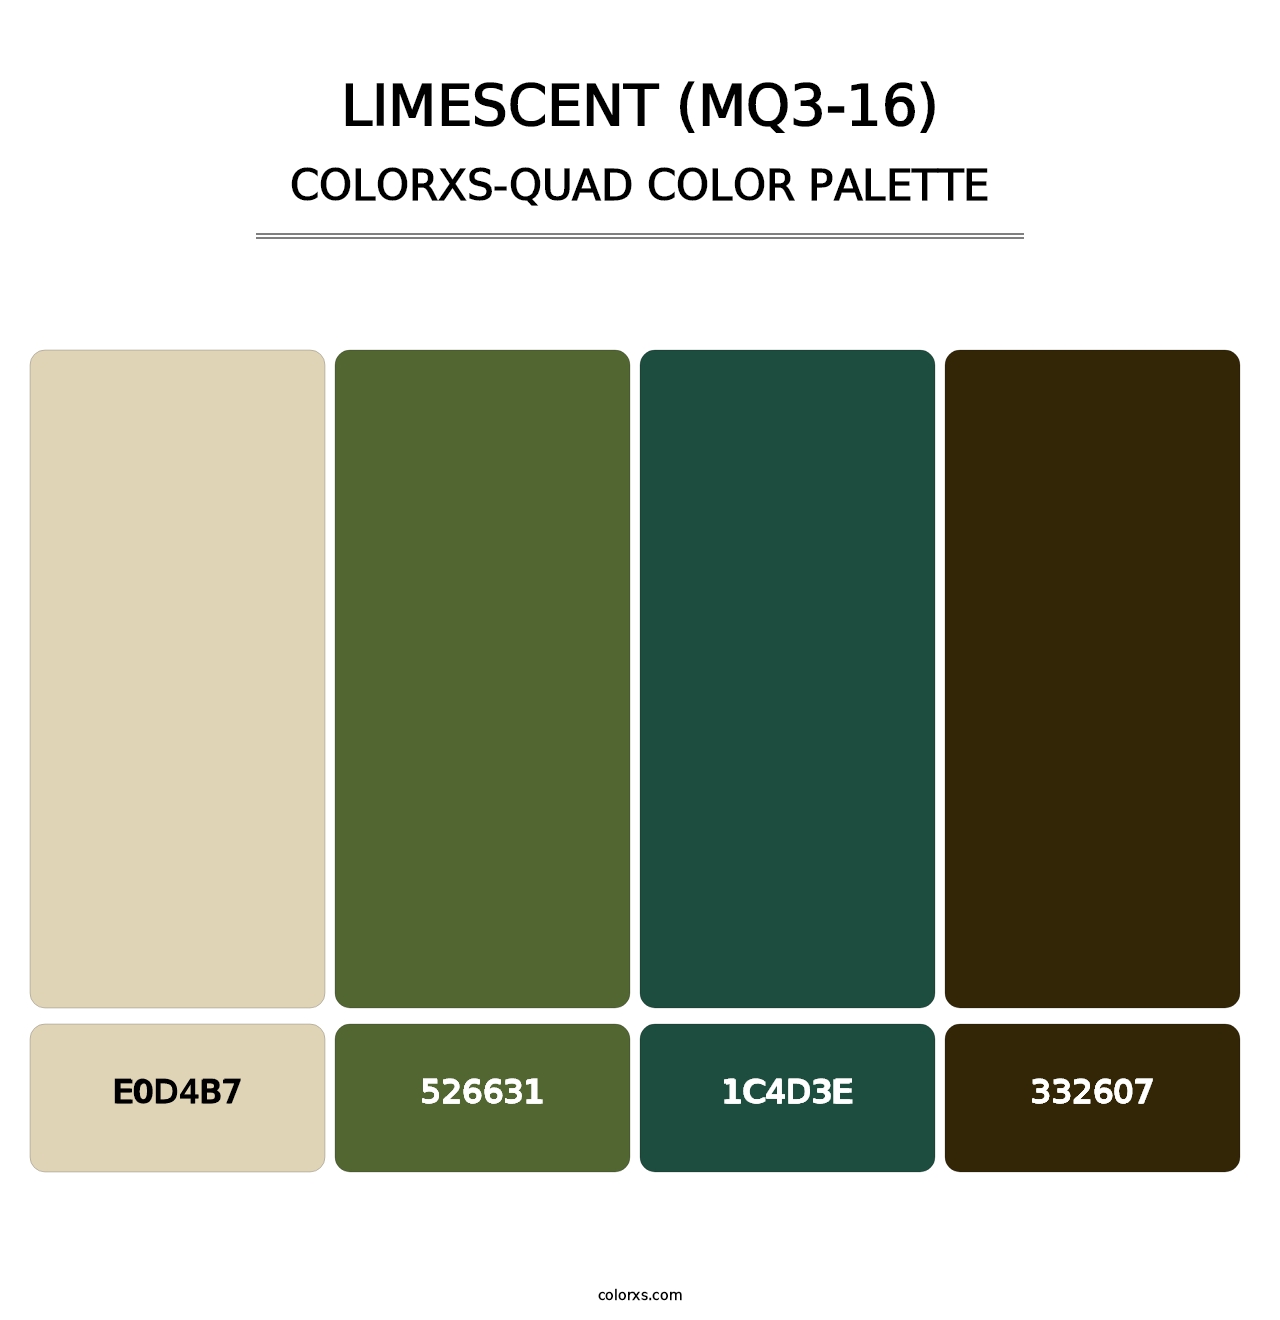 Limescent (MQ3-16) - Colorxs Quad Palette